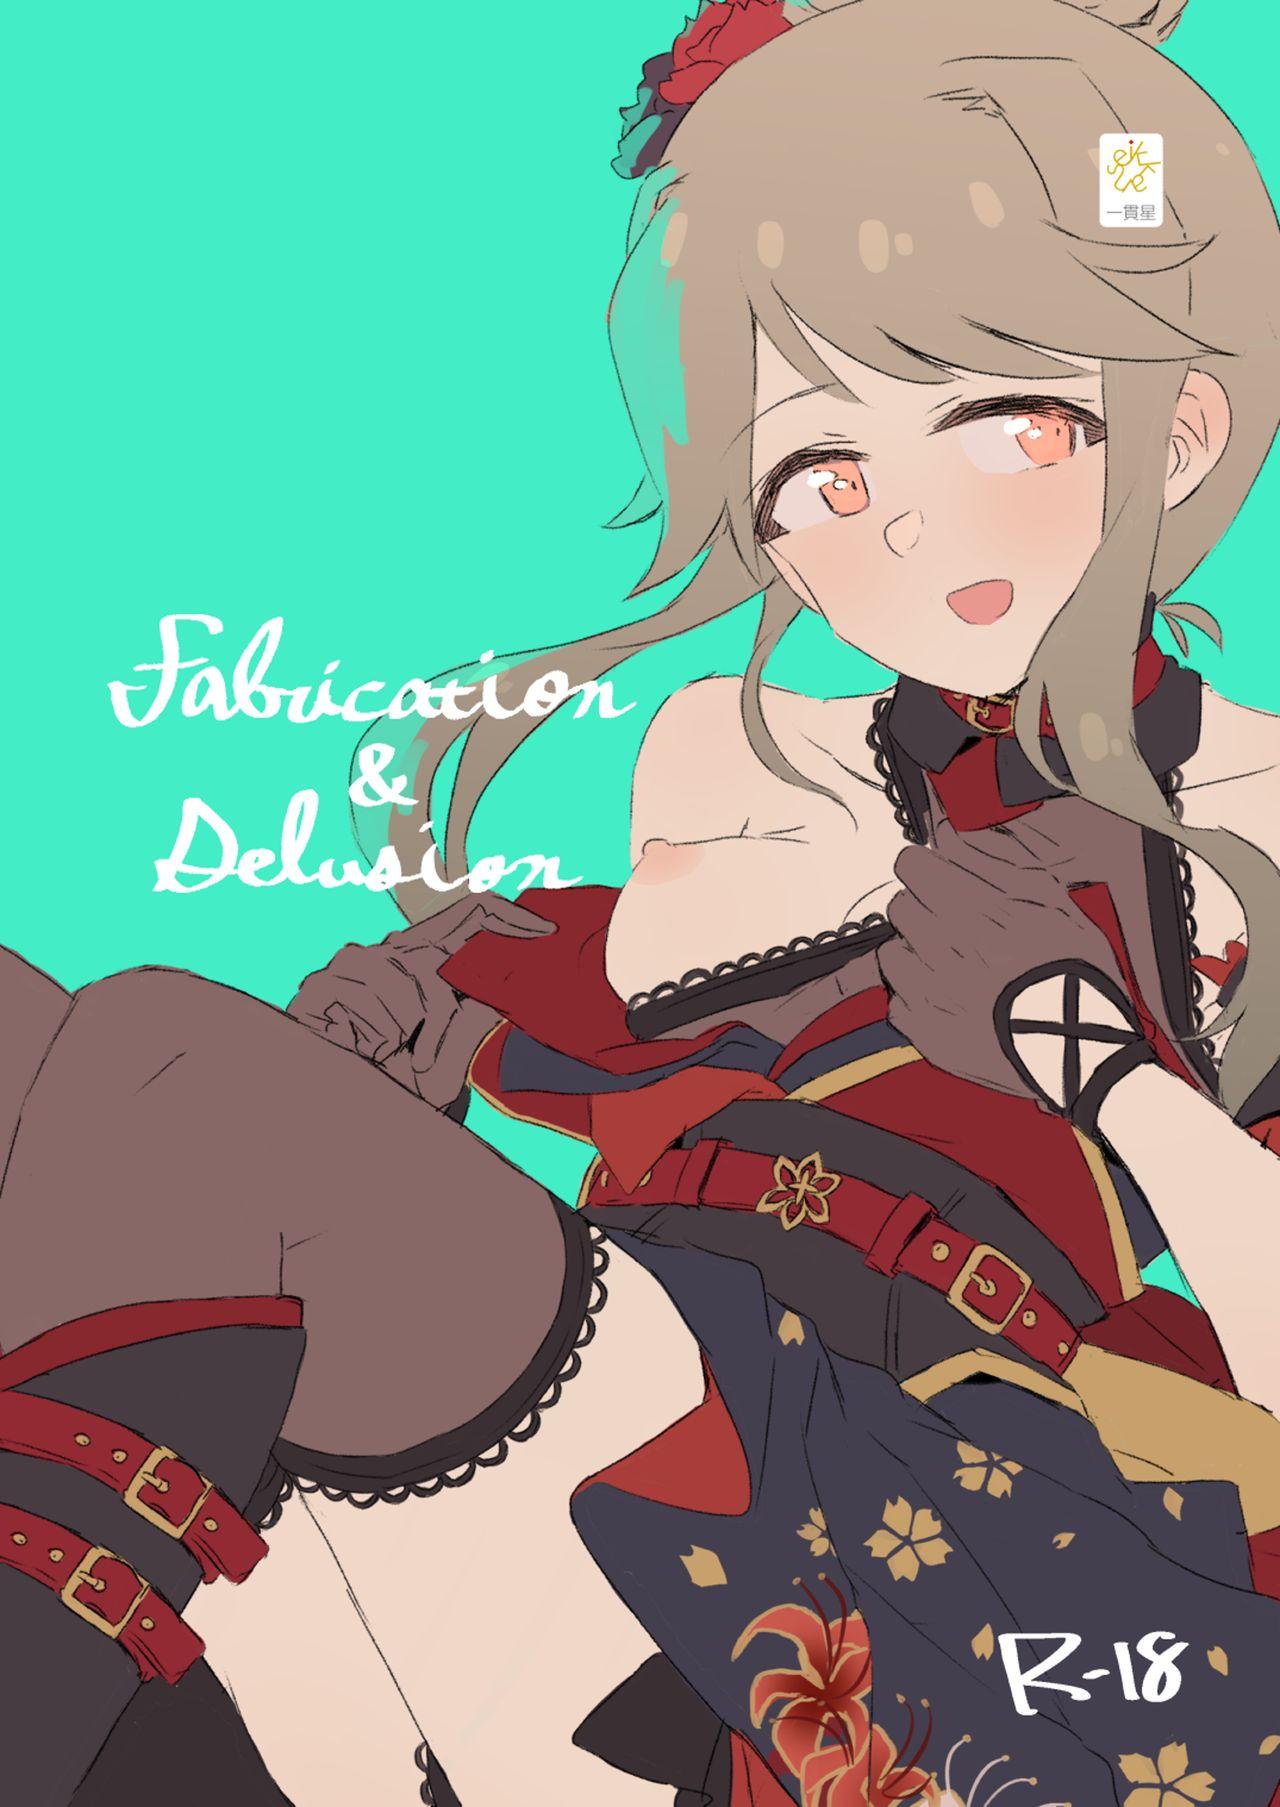 Fabrication&Delusion 1